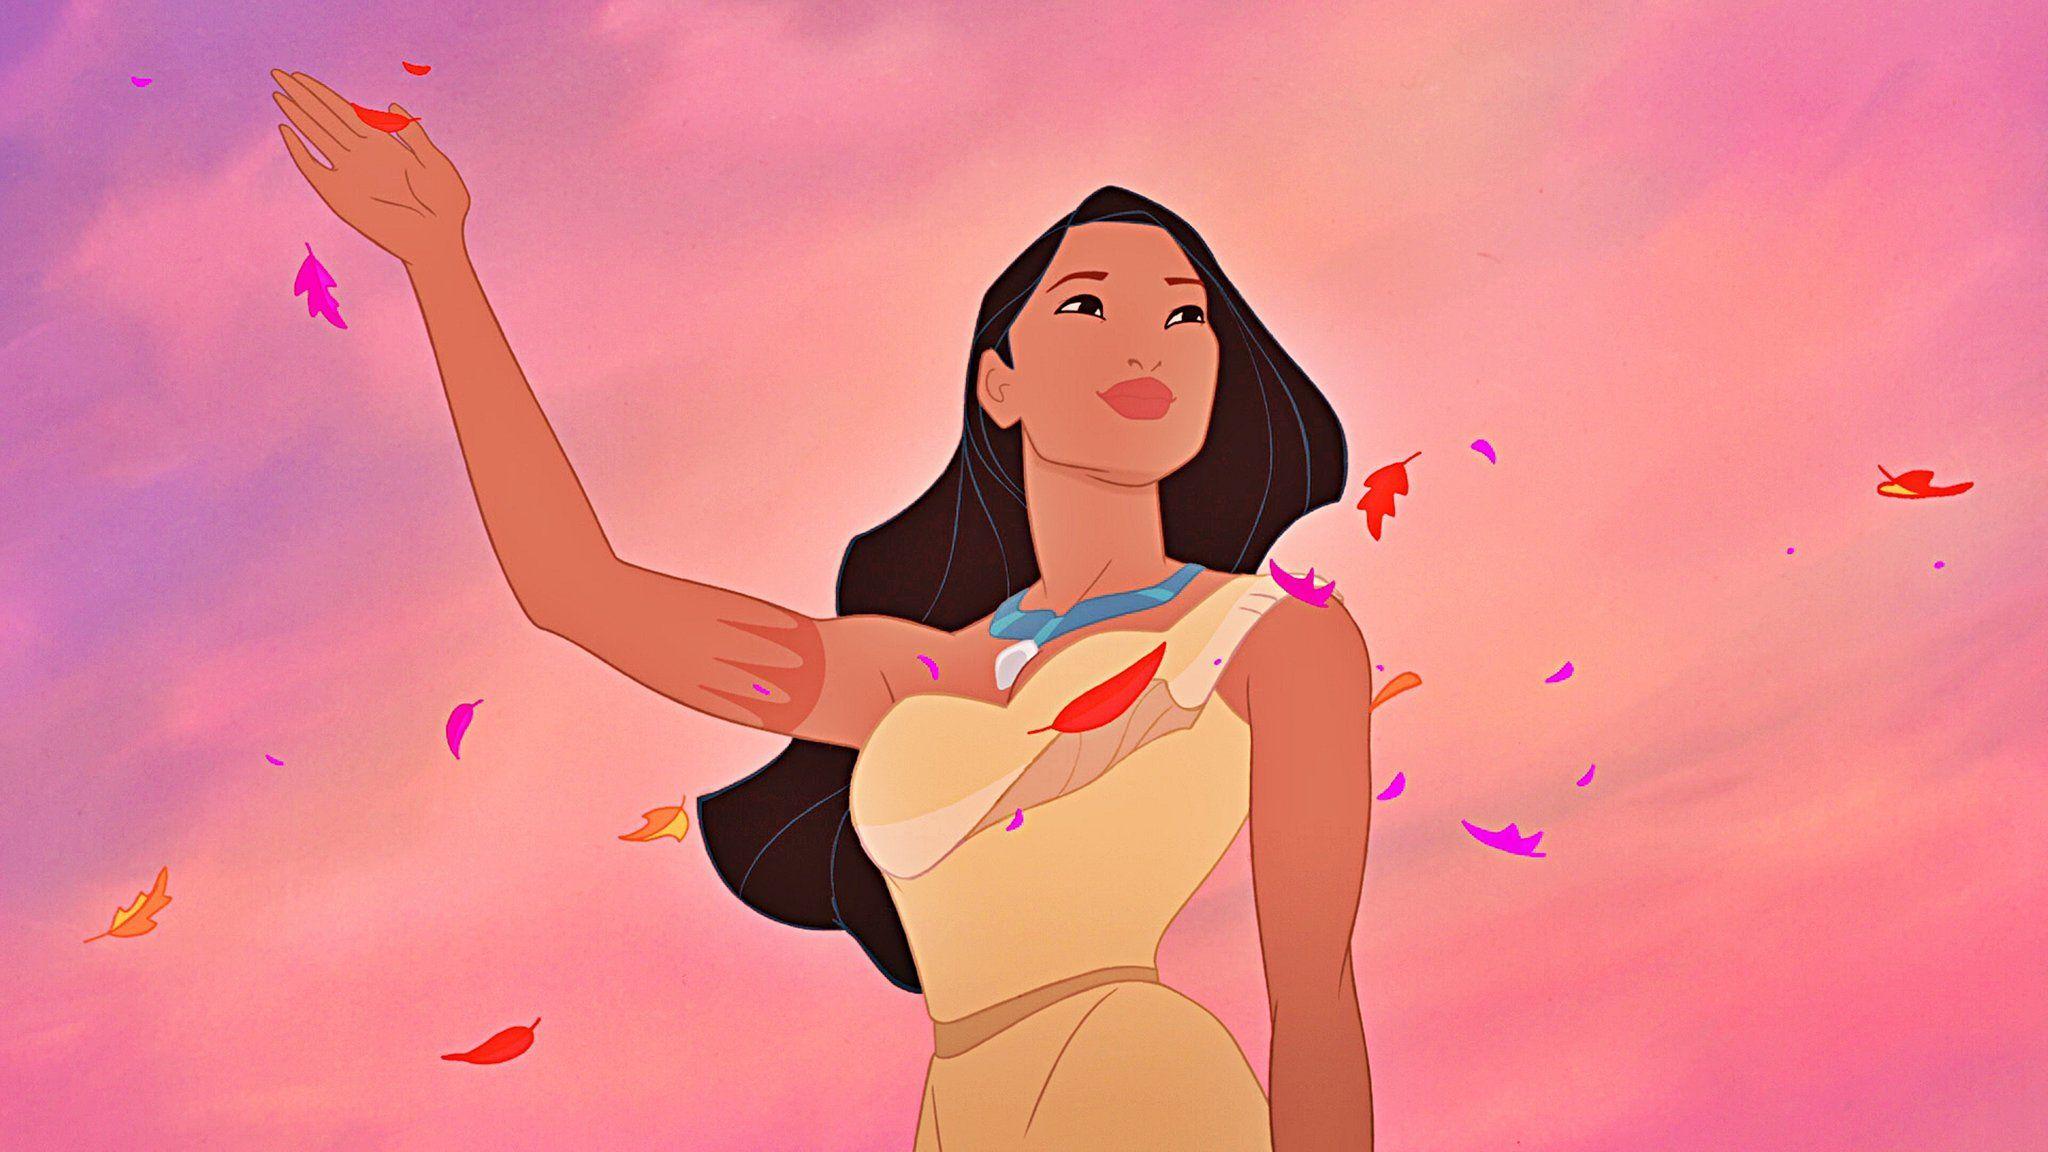 Disney Princess Pocahontas Wallpapers Top Free Disney Princess Pocahontas Backgrounds